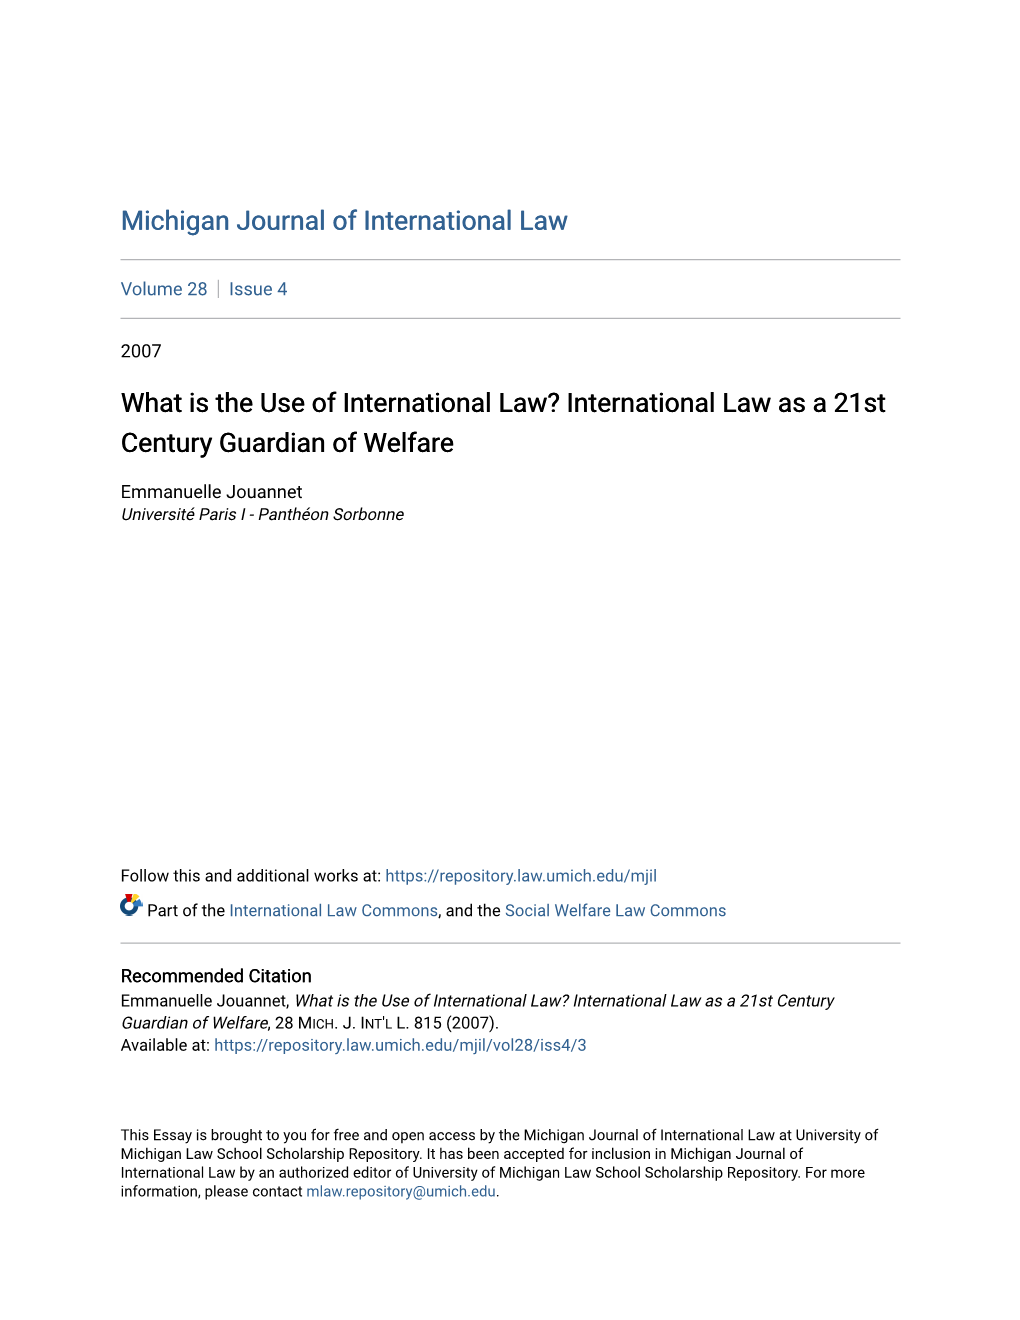 International Law As a 21St Century Guardian of Welfare